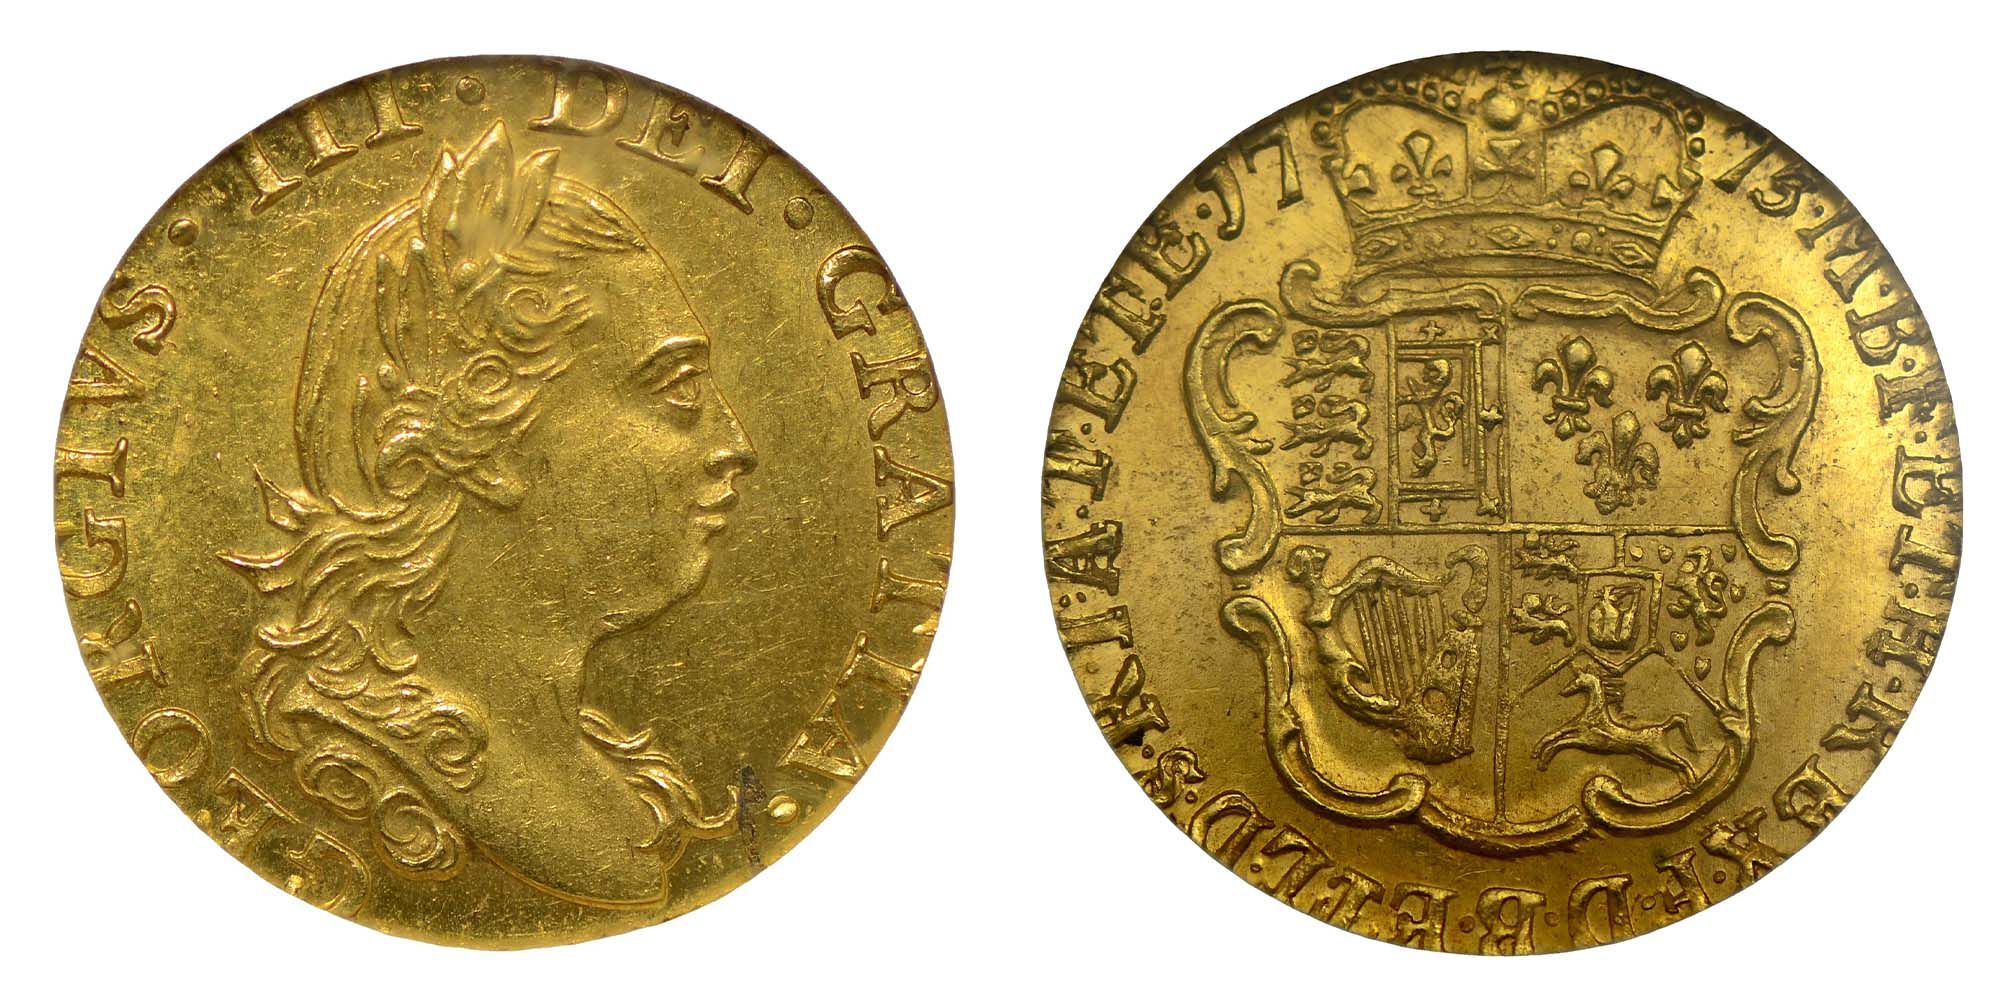 George III Gold Half-Guinea 1775 Rare